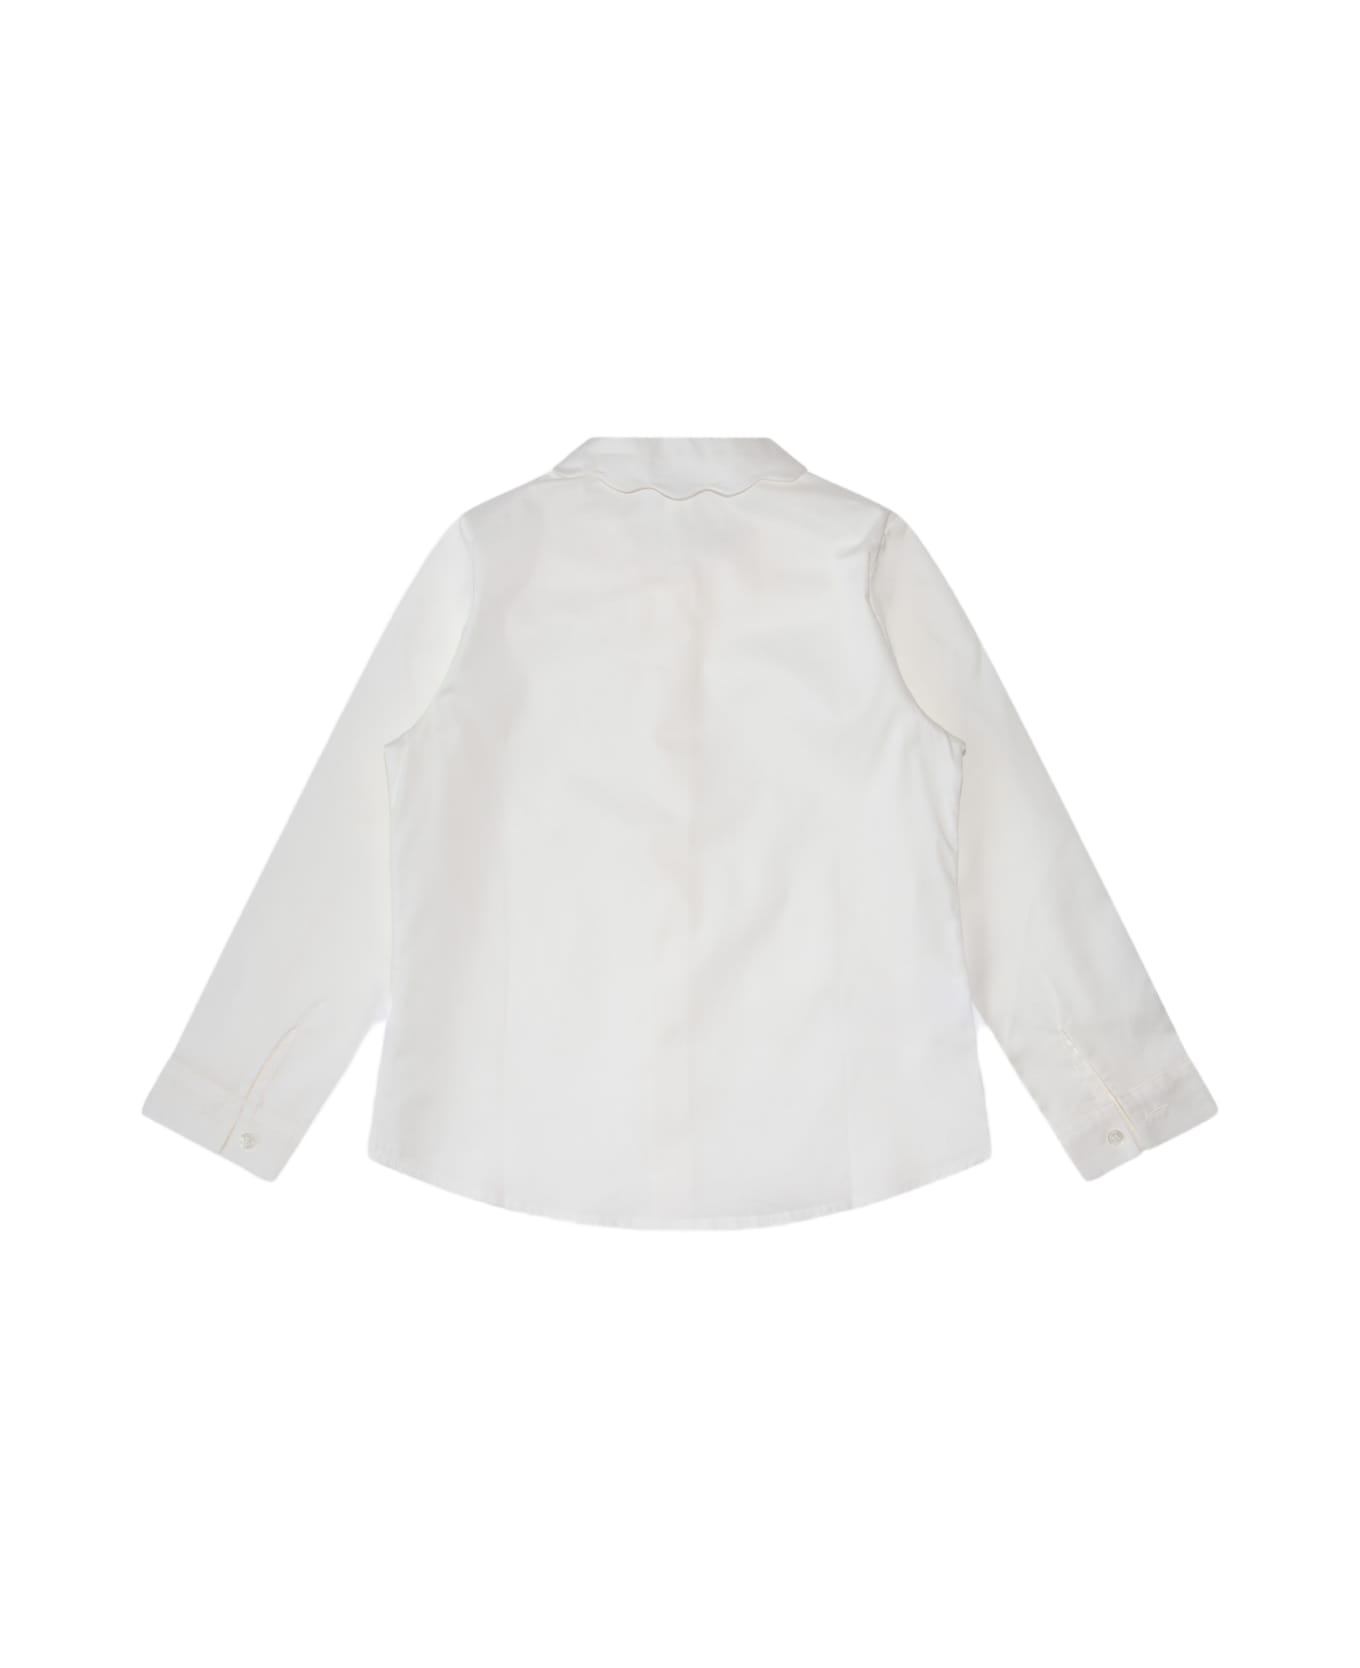 Il Gufo White Cotton Shirt - Latte